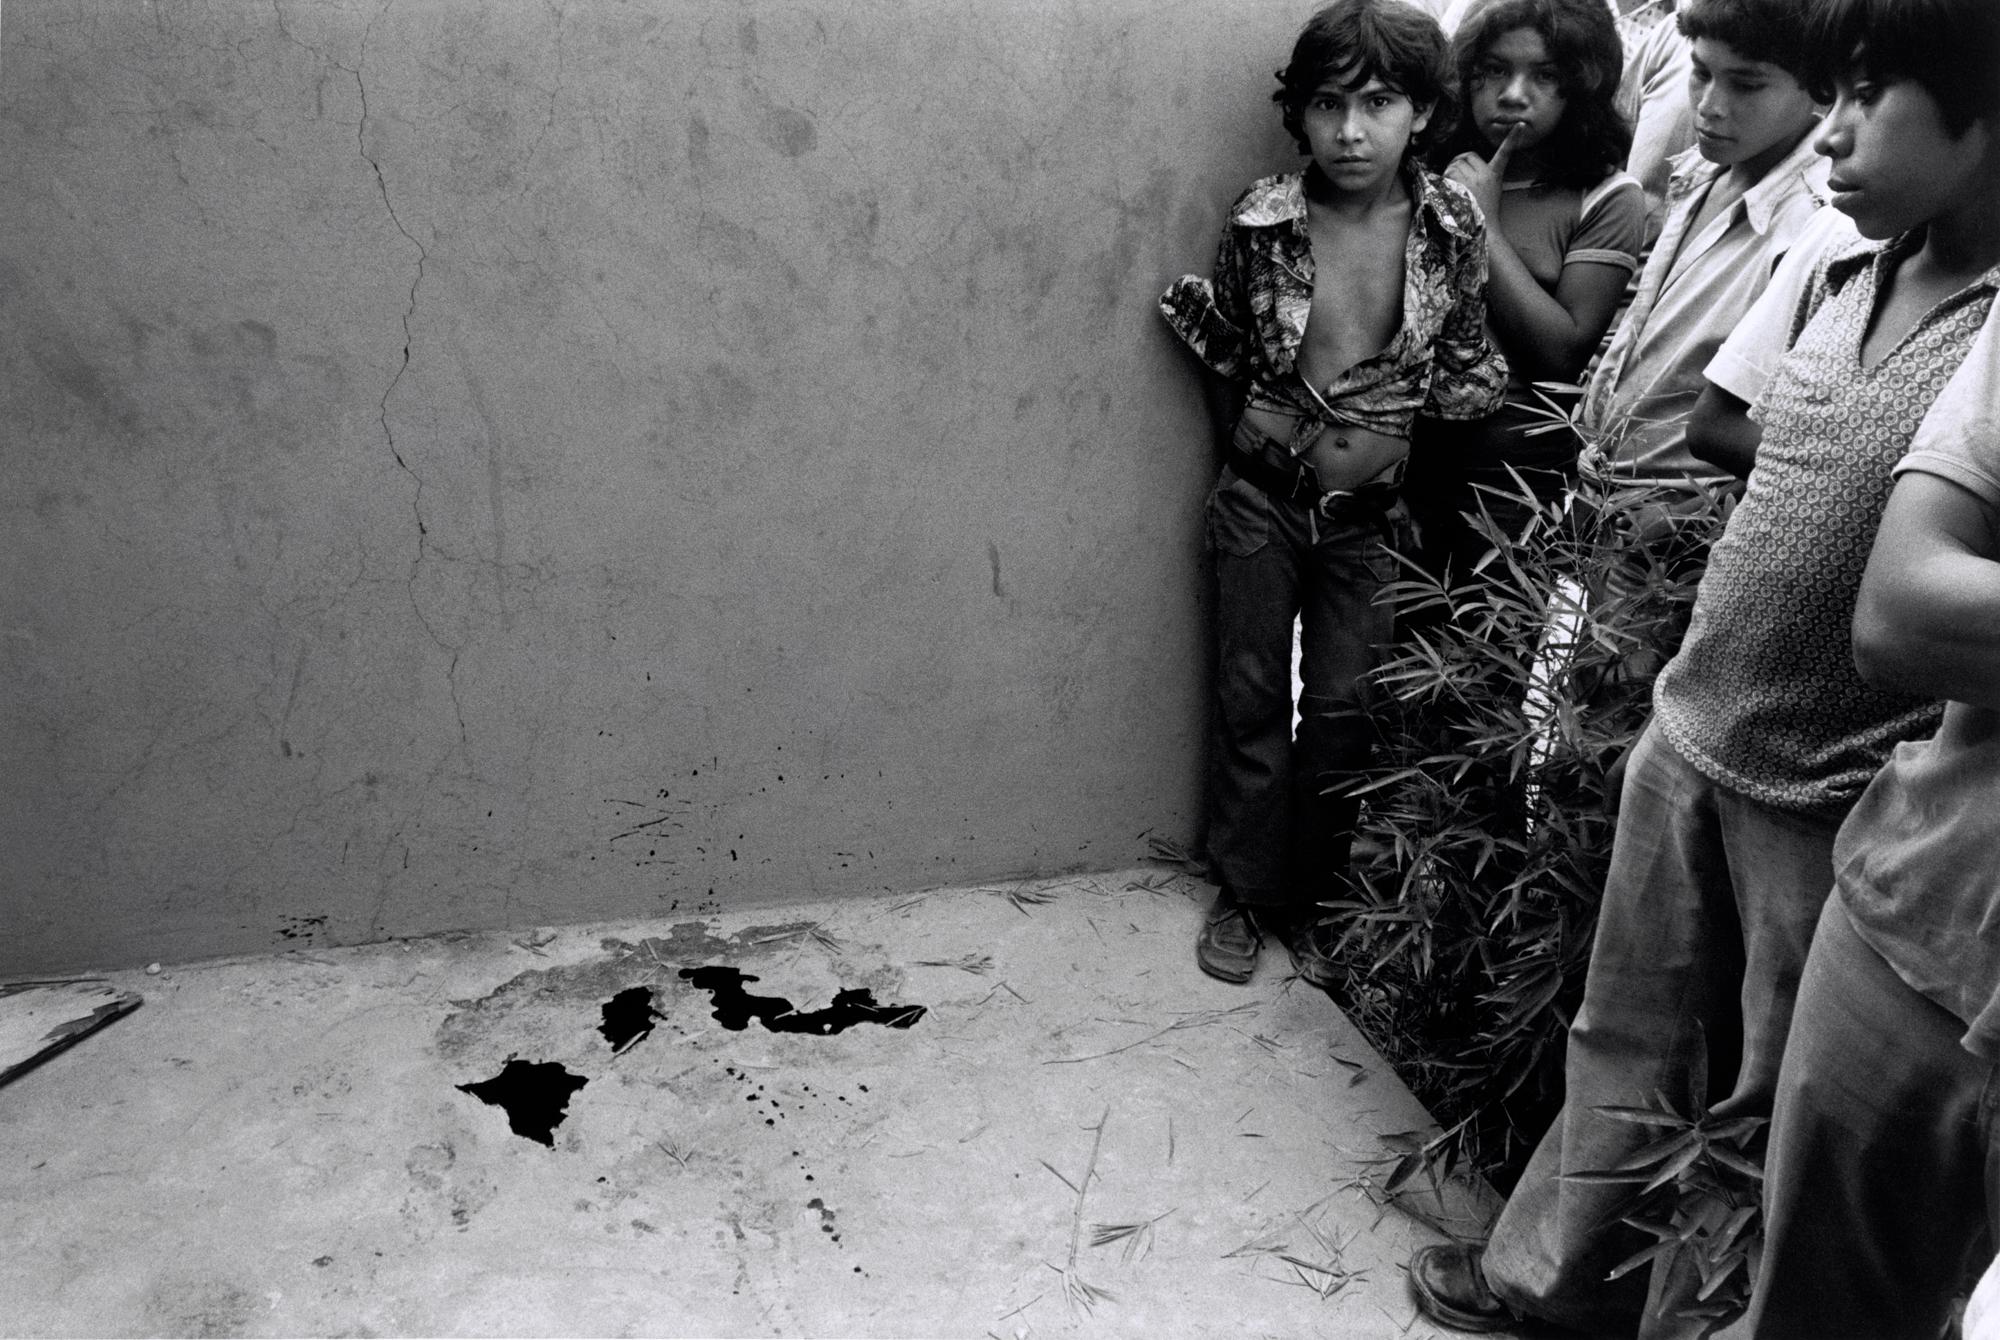 Blood of student slain while handing out political leaflets. San Salvador, 1979